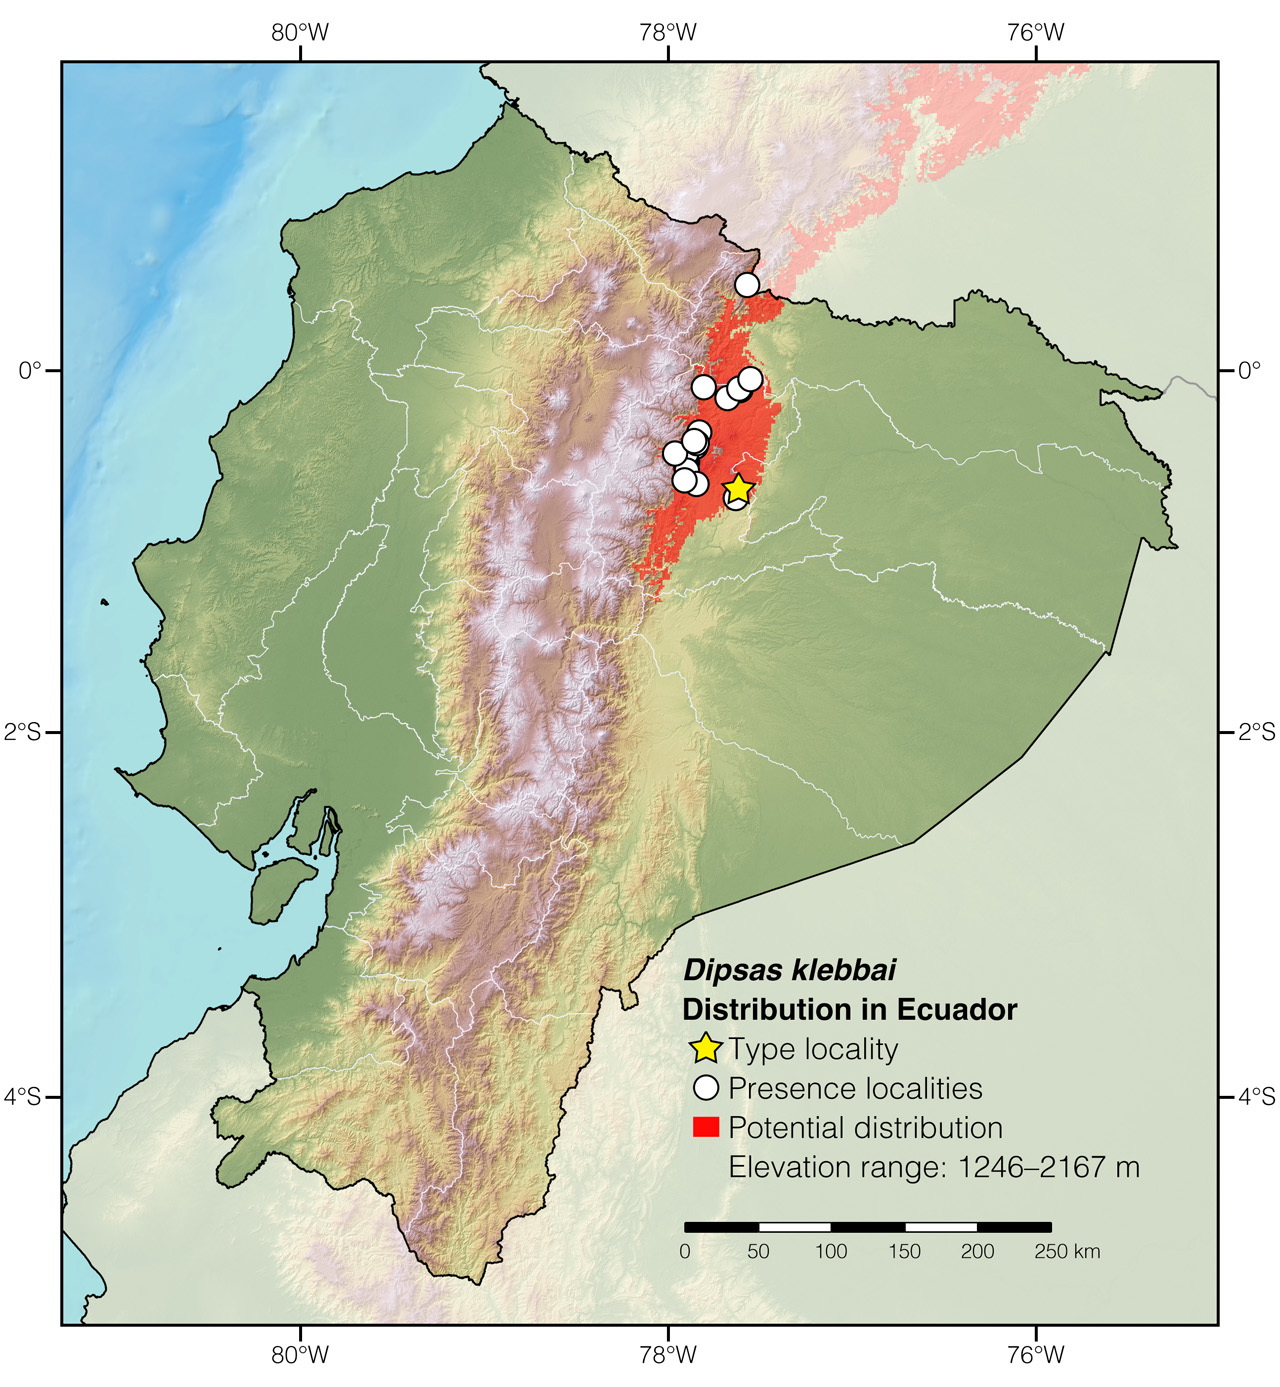 Distribution of Dipsas klebbai in Ecuador